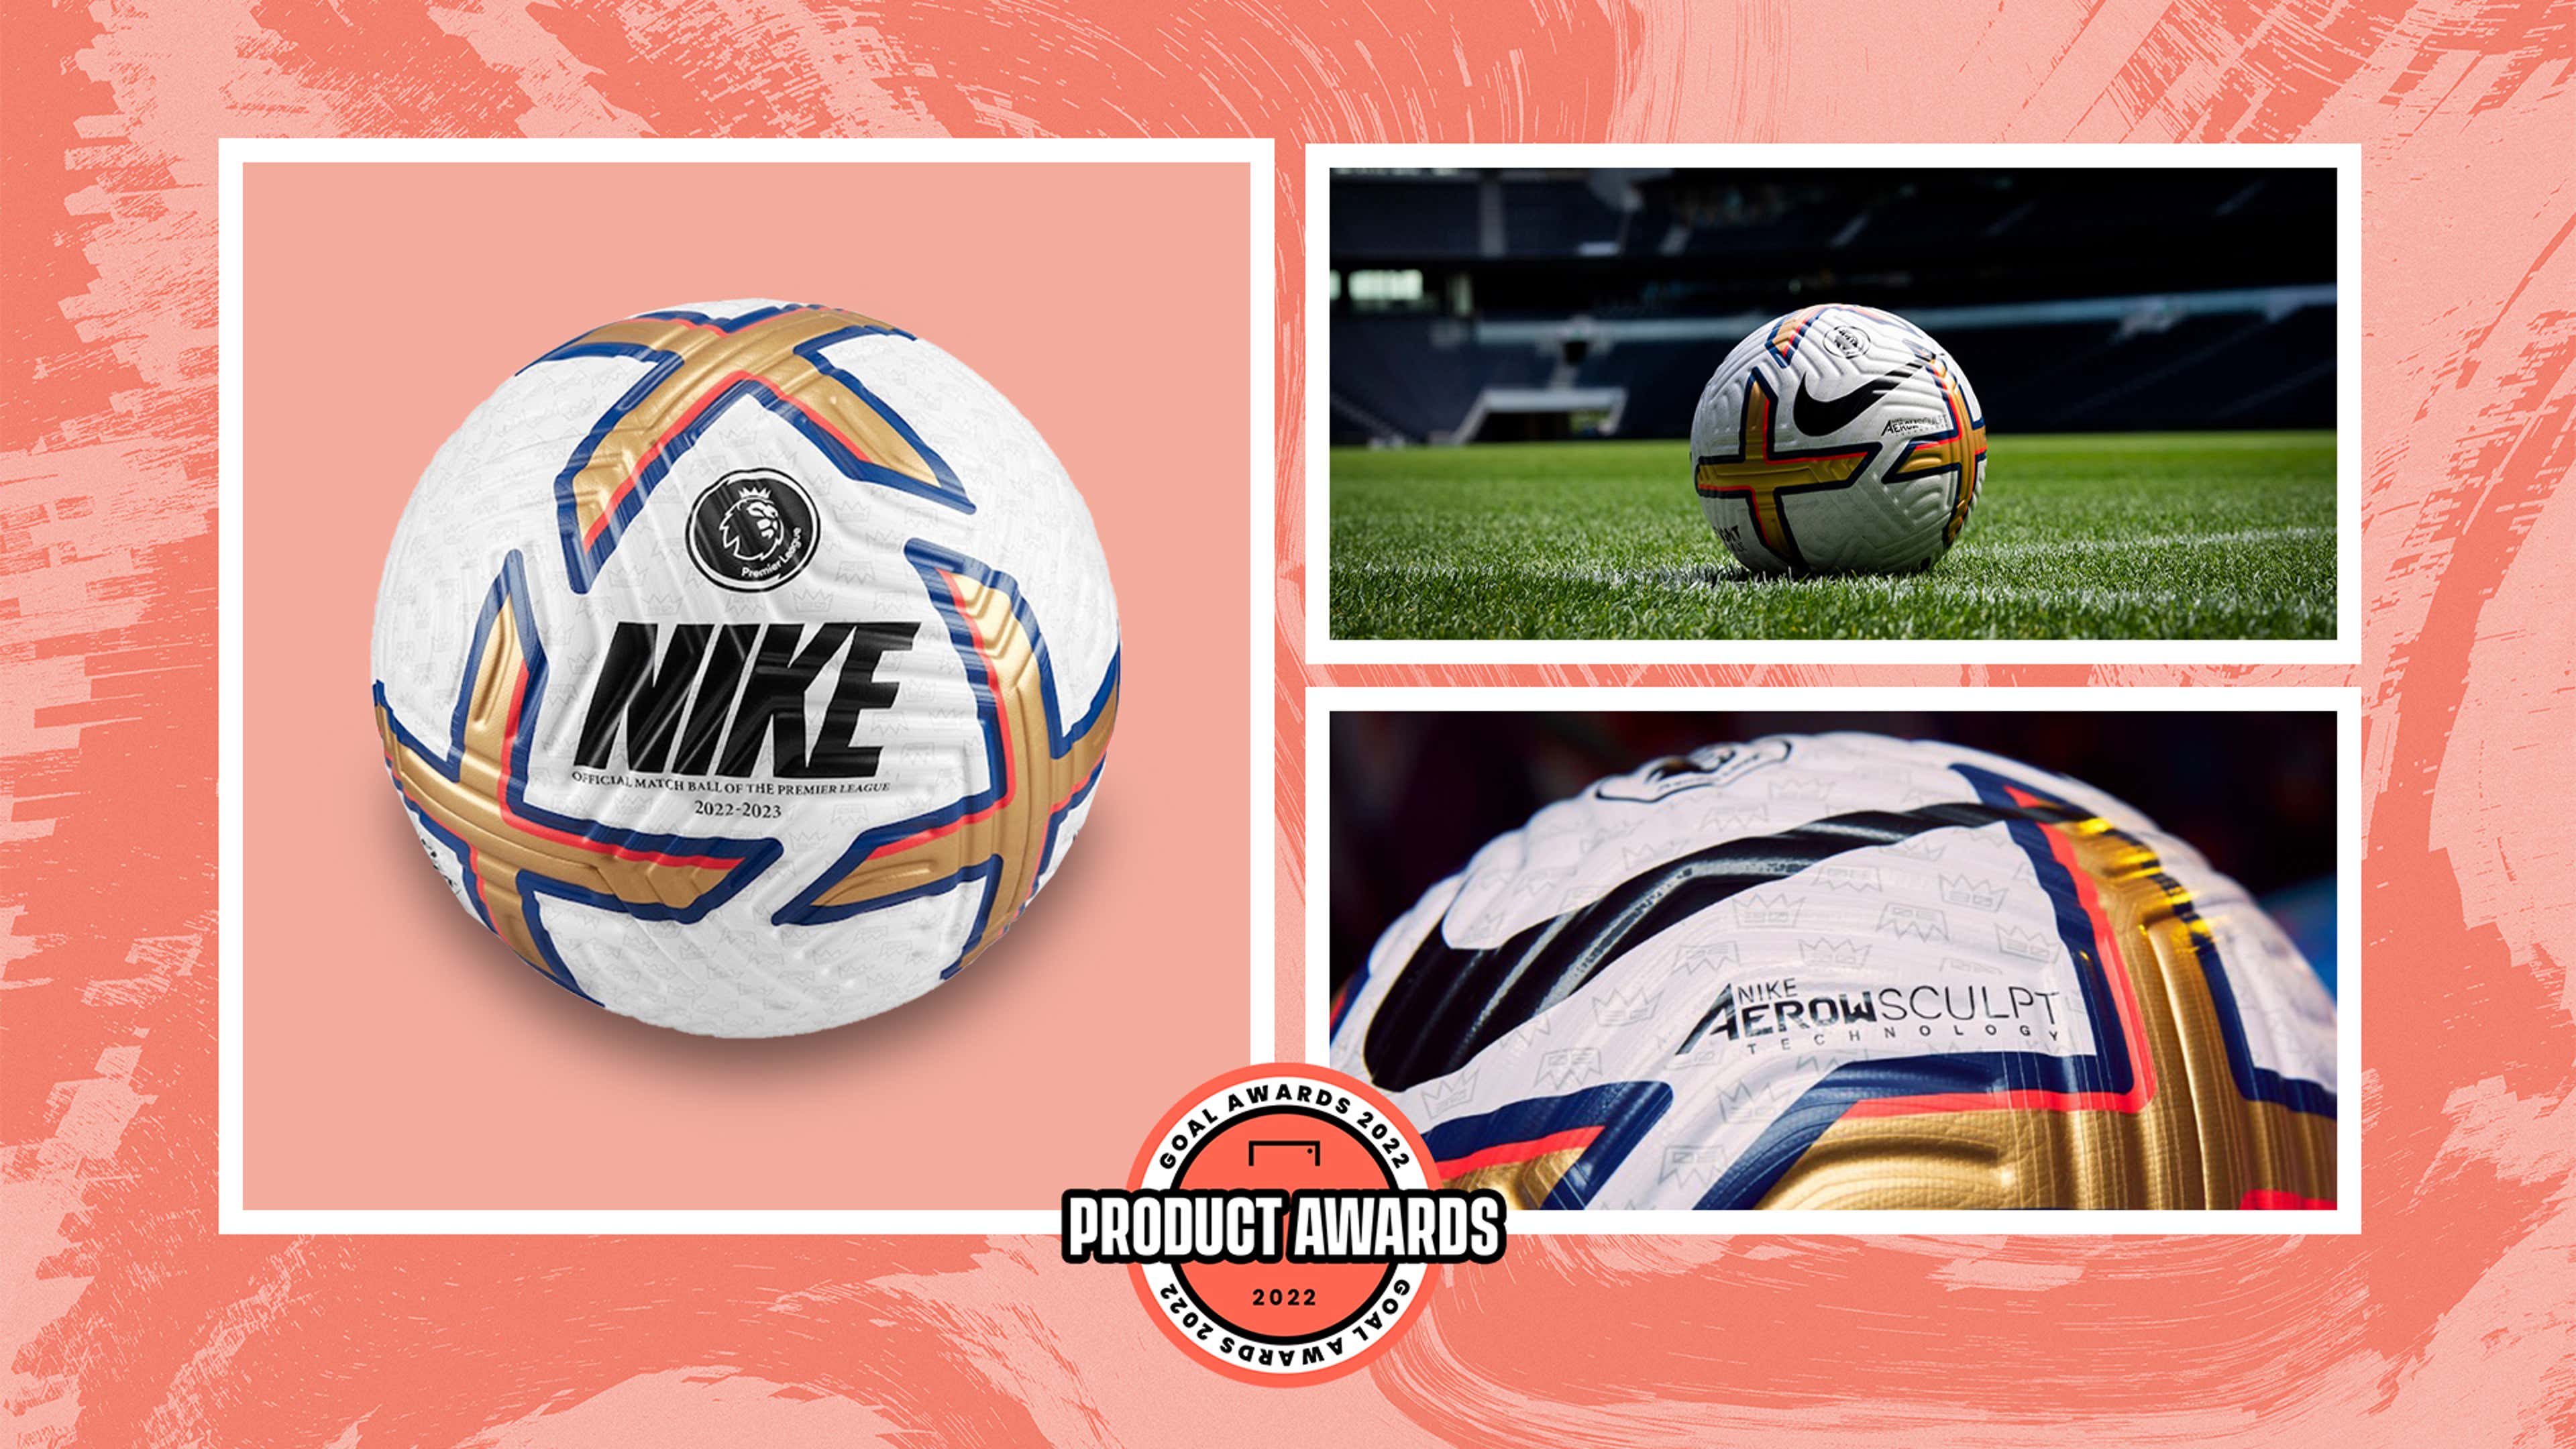 Nike Flight 2022 is official match ball of Premier League 2022/2023